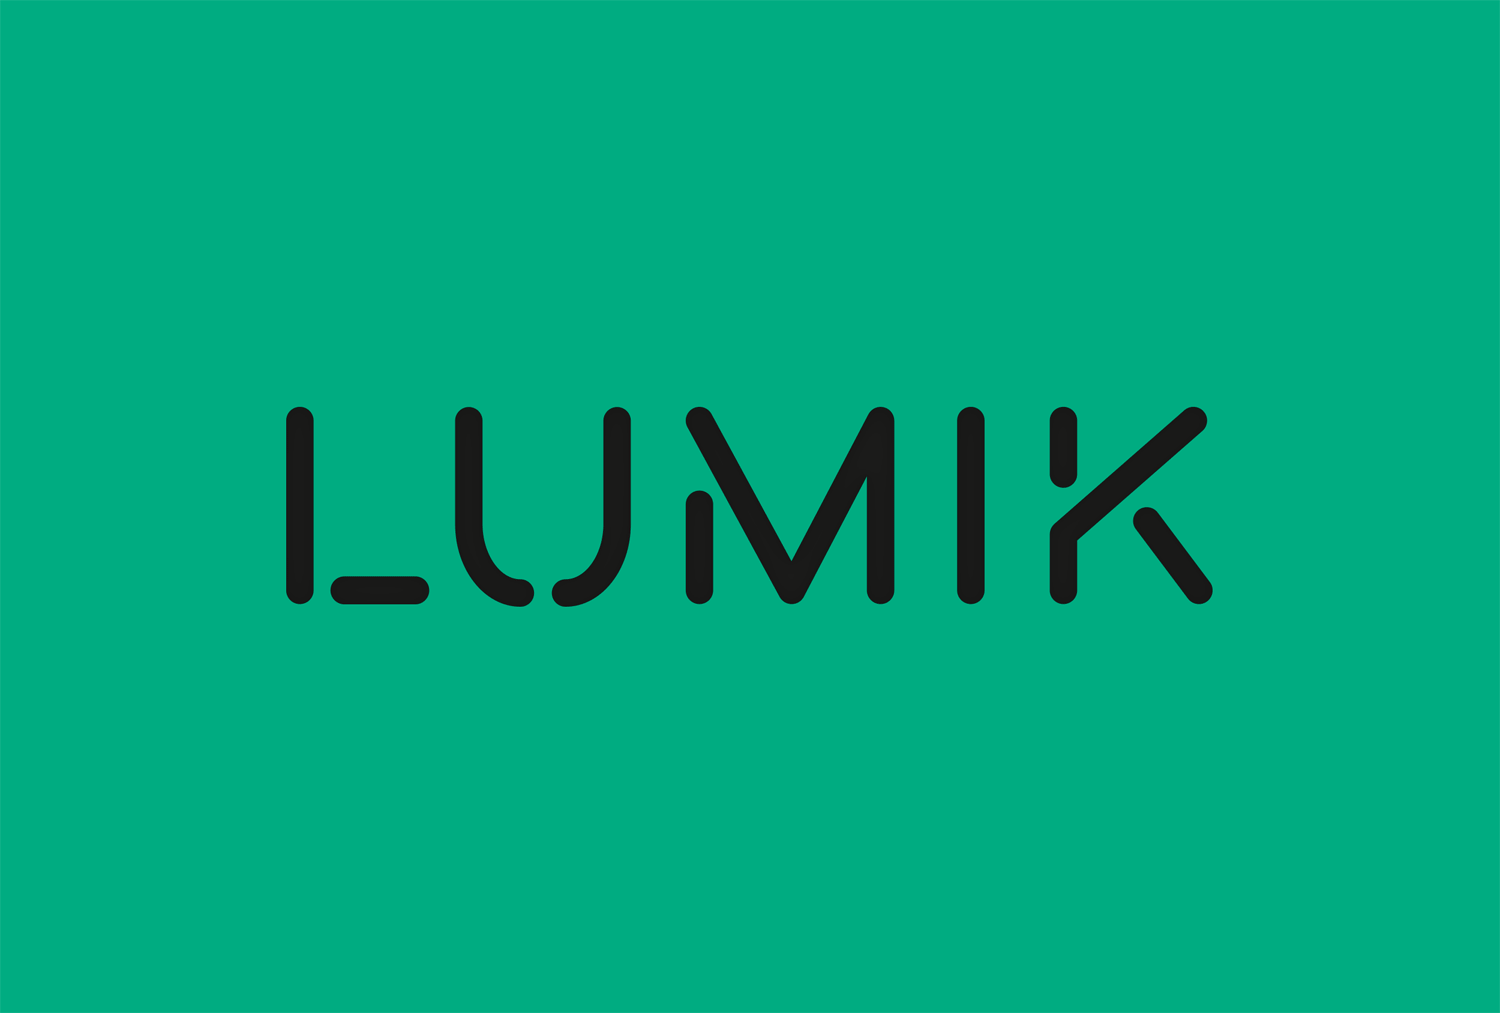 Creative Logotype Gallery & Inspiration: Lumik by Hey, Spain